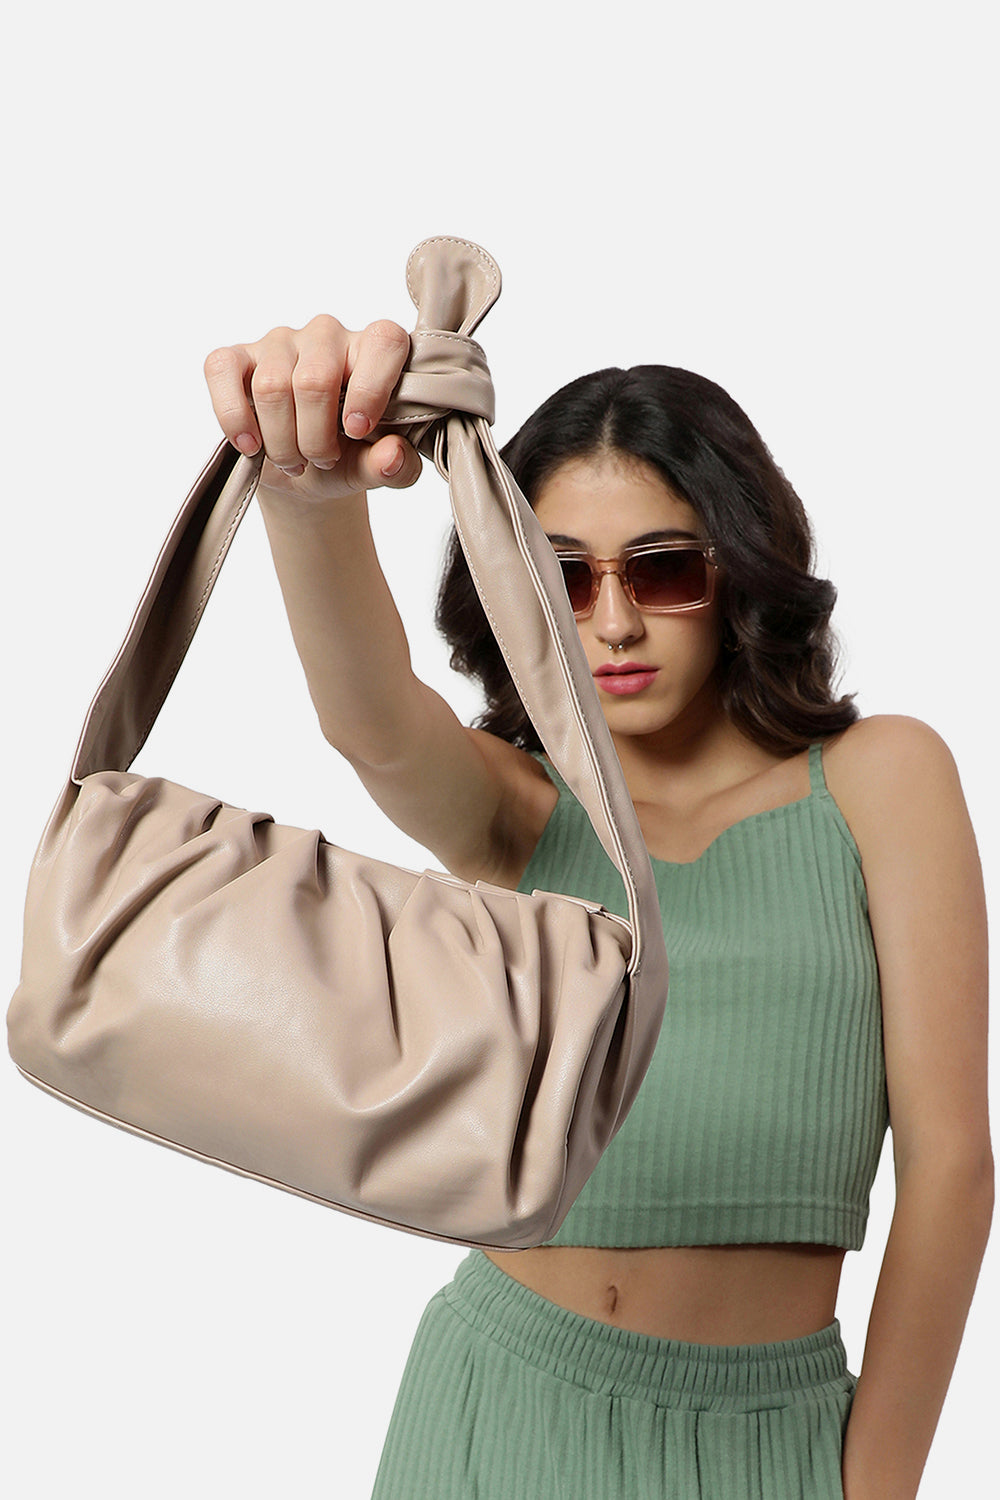 Linette Beige Handbag